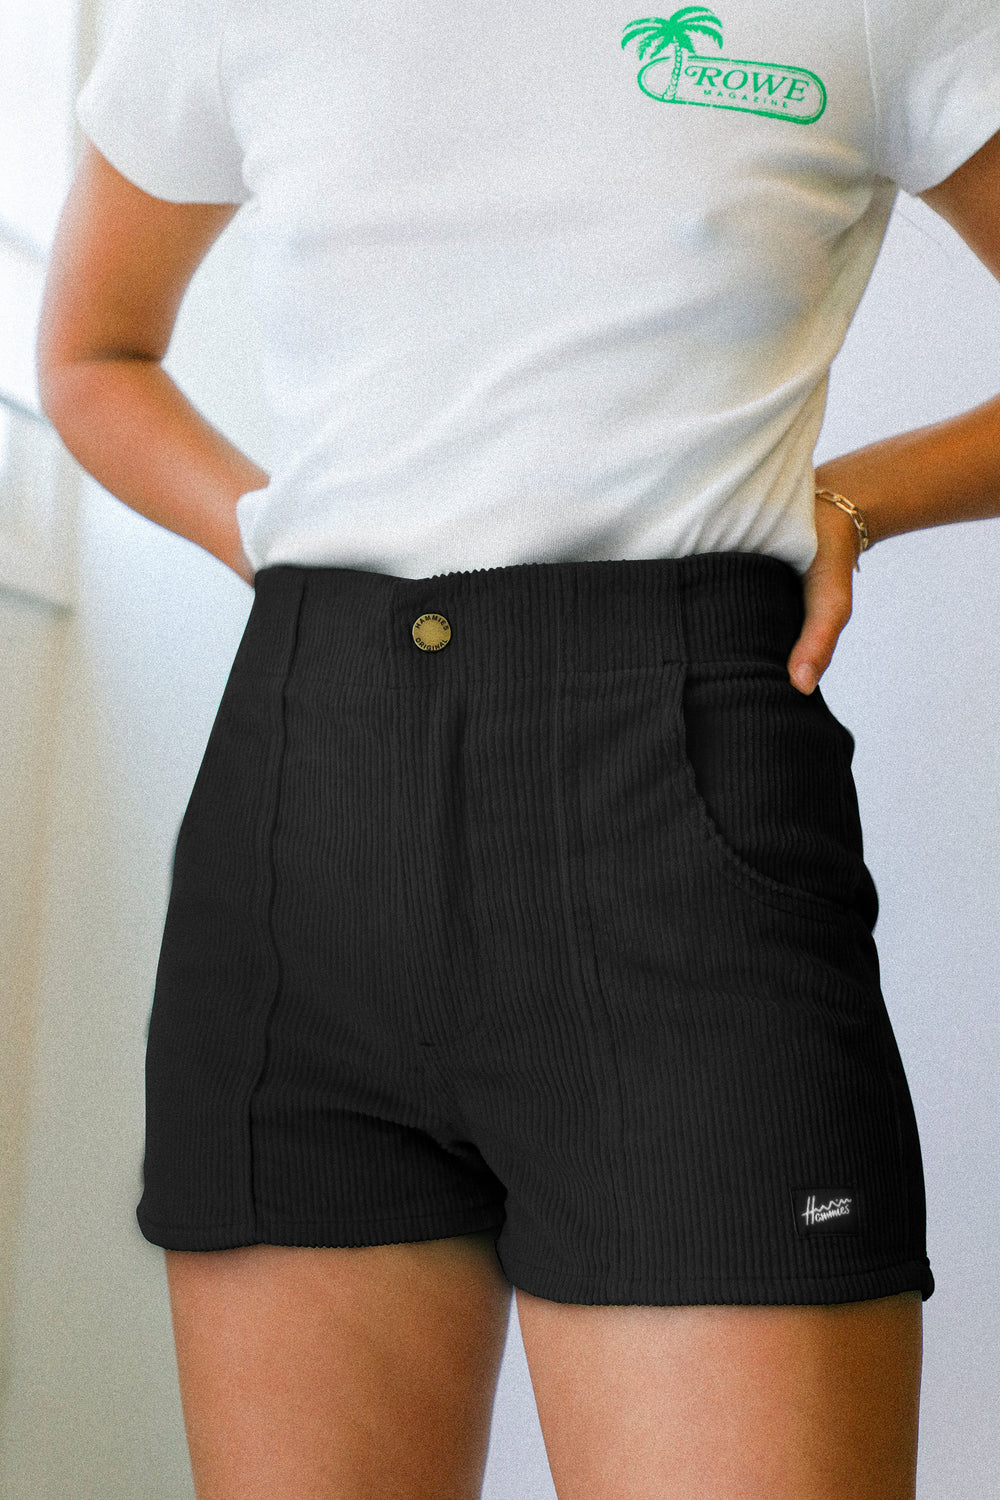 Hammies Shorts - Black